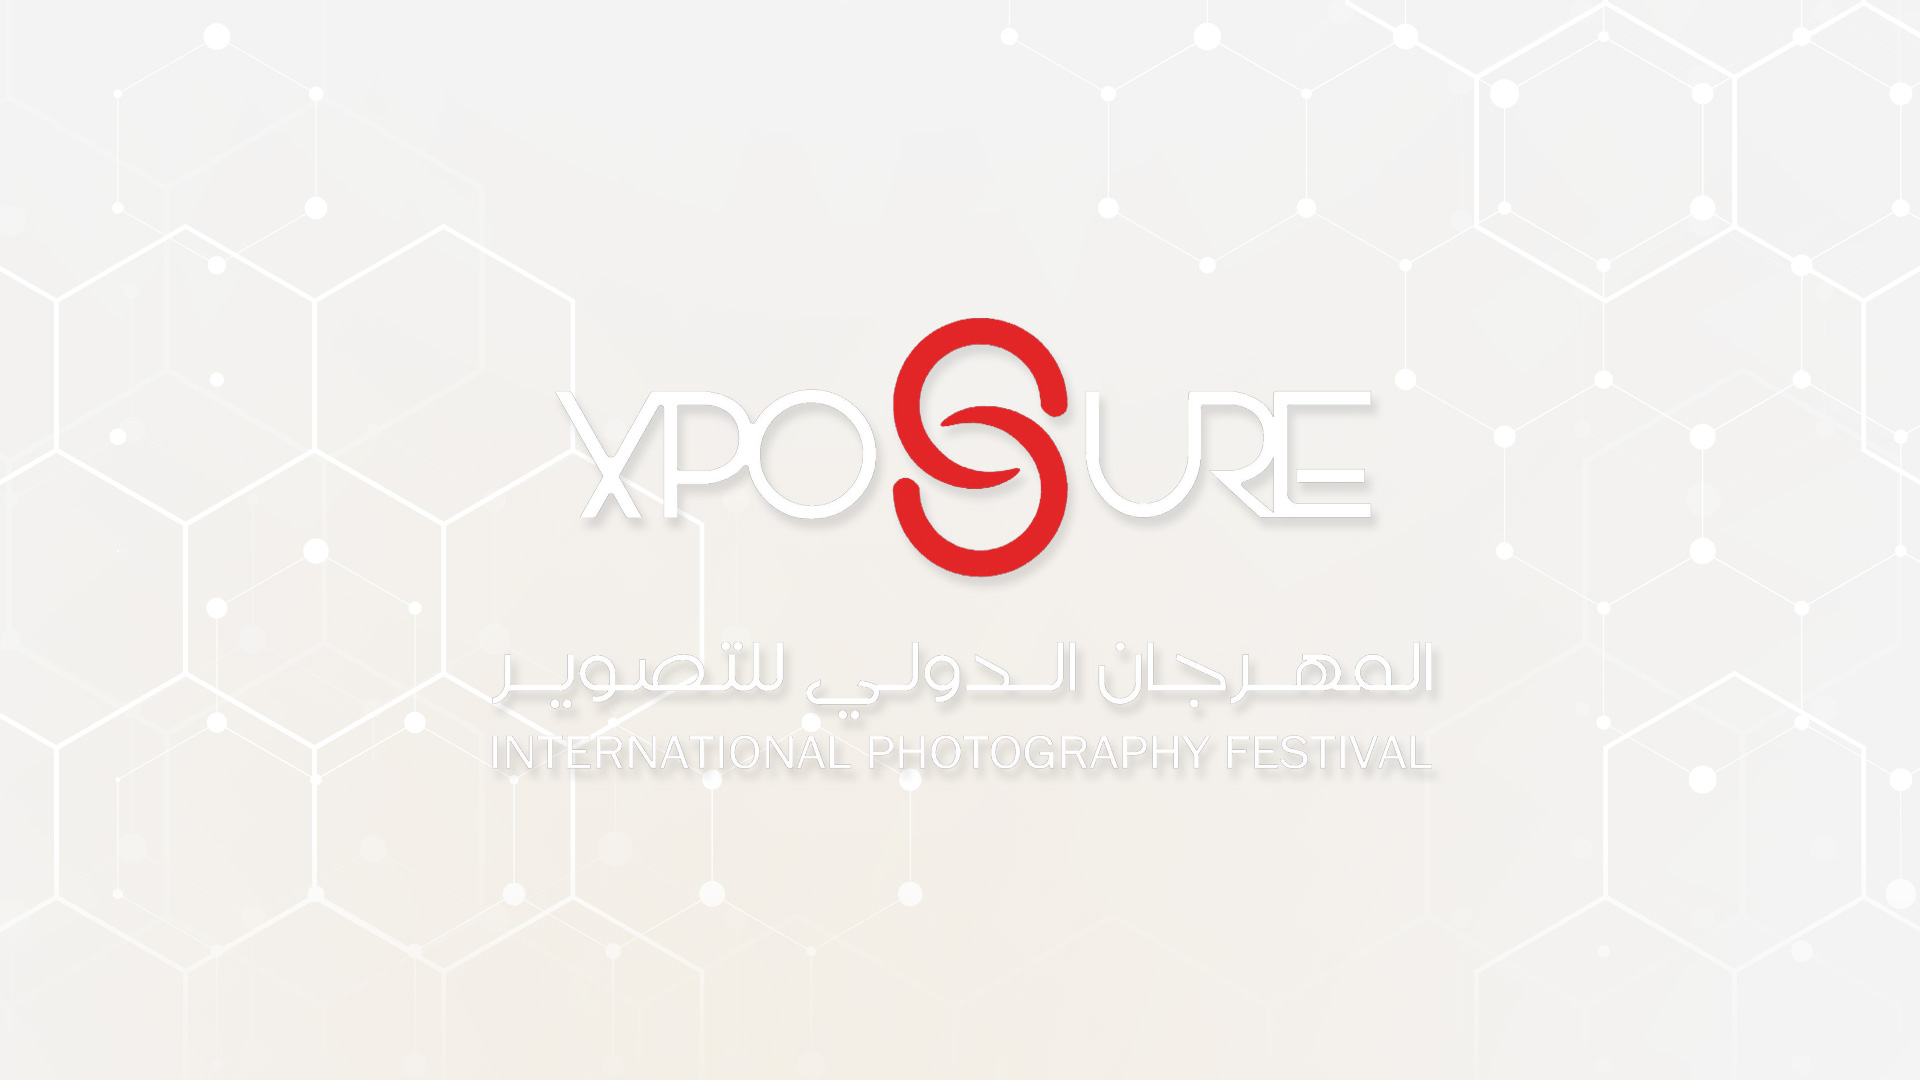 Xposure International Photography Festival